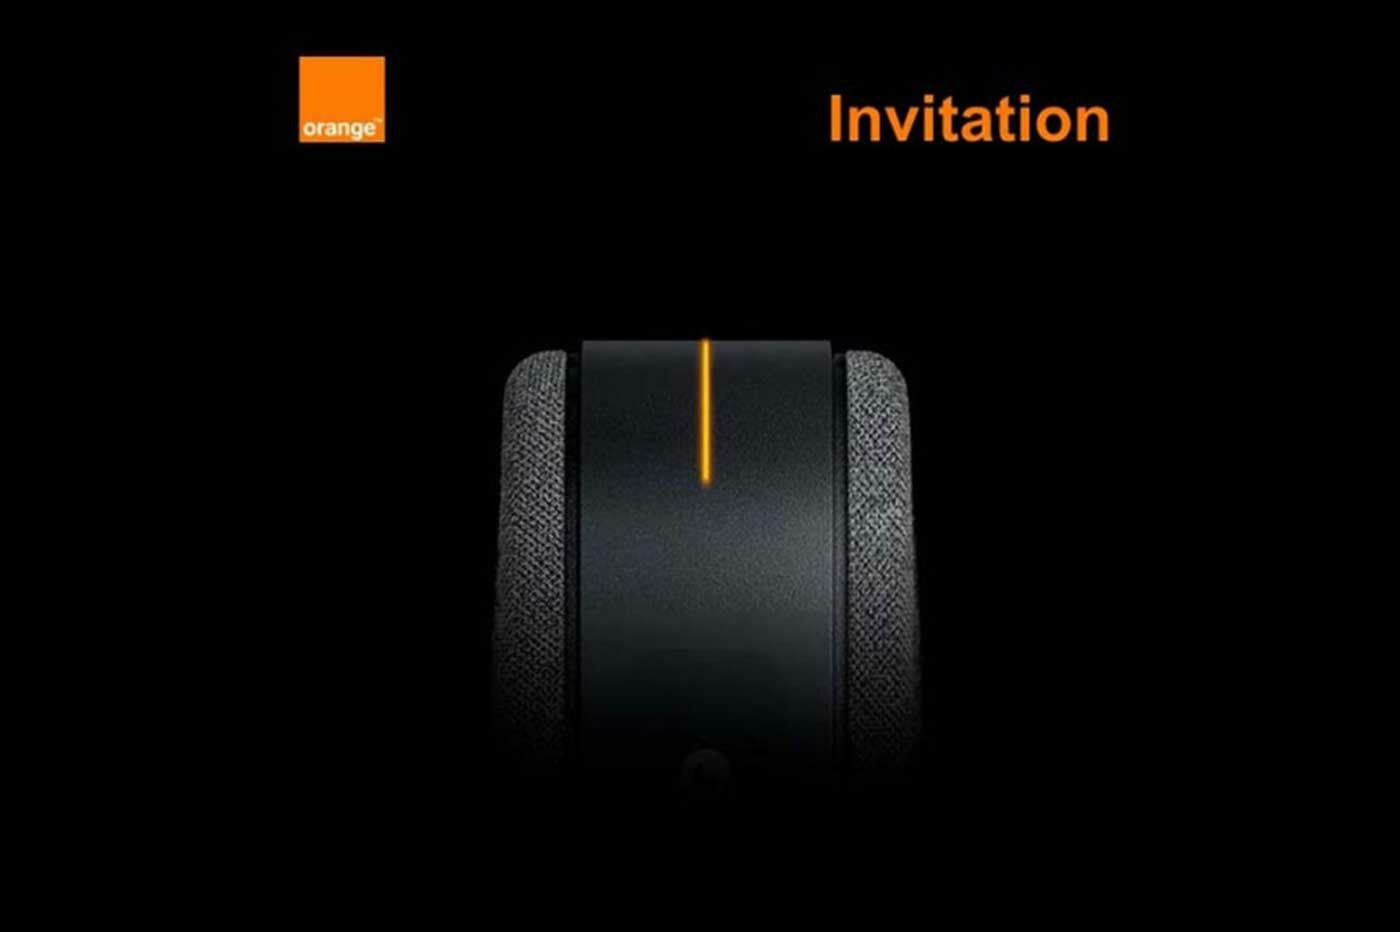 Orange prÃ©sentera sa Livebox 6 le 6 avril prochain